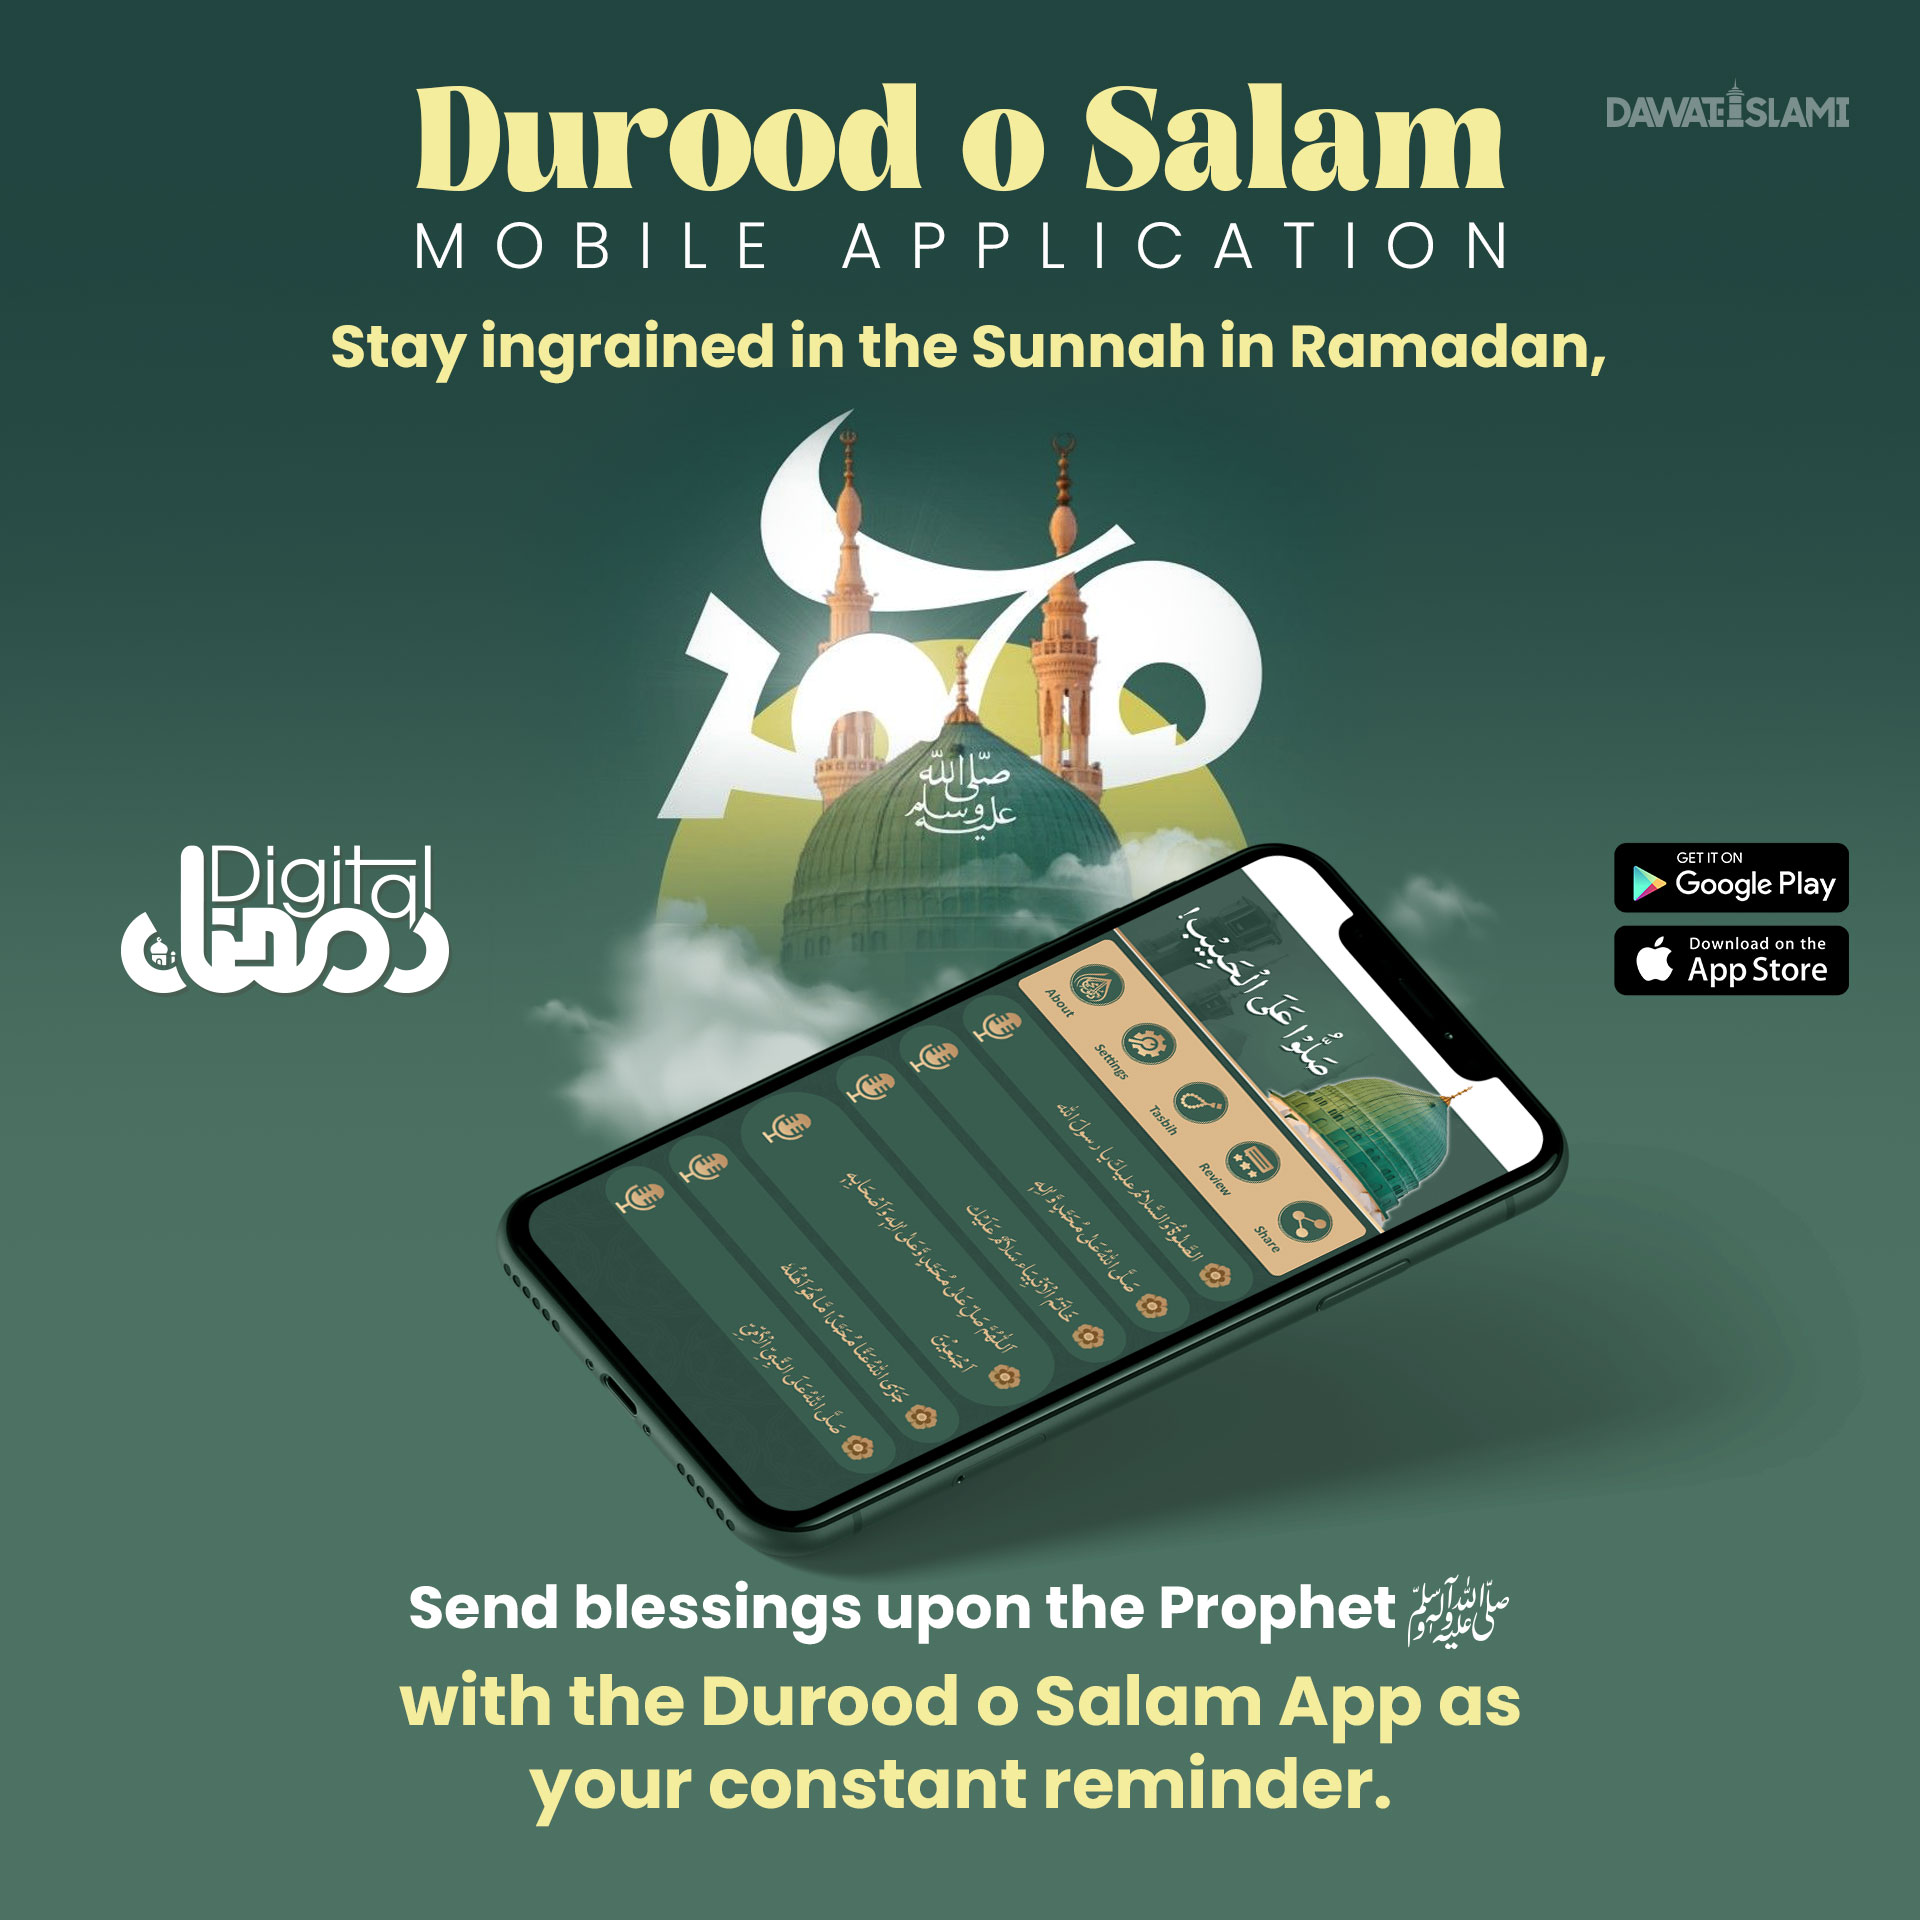 durood o salam mobile application